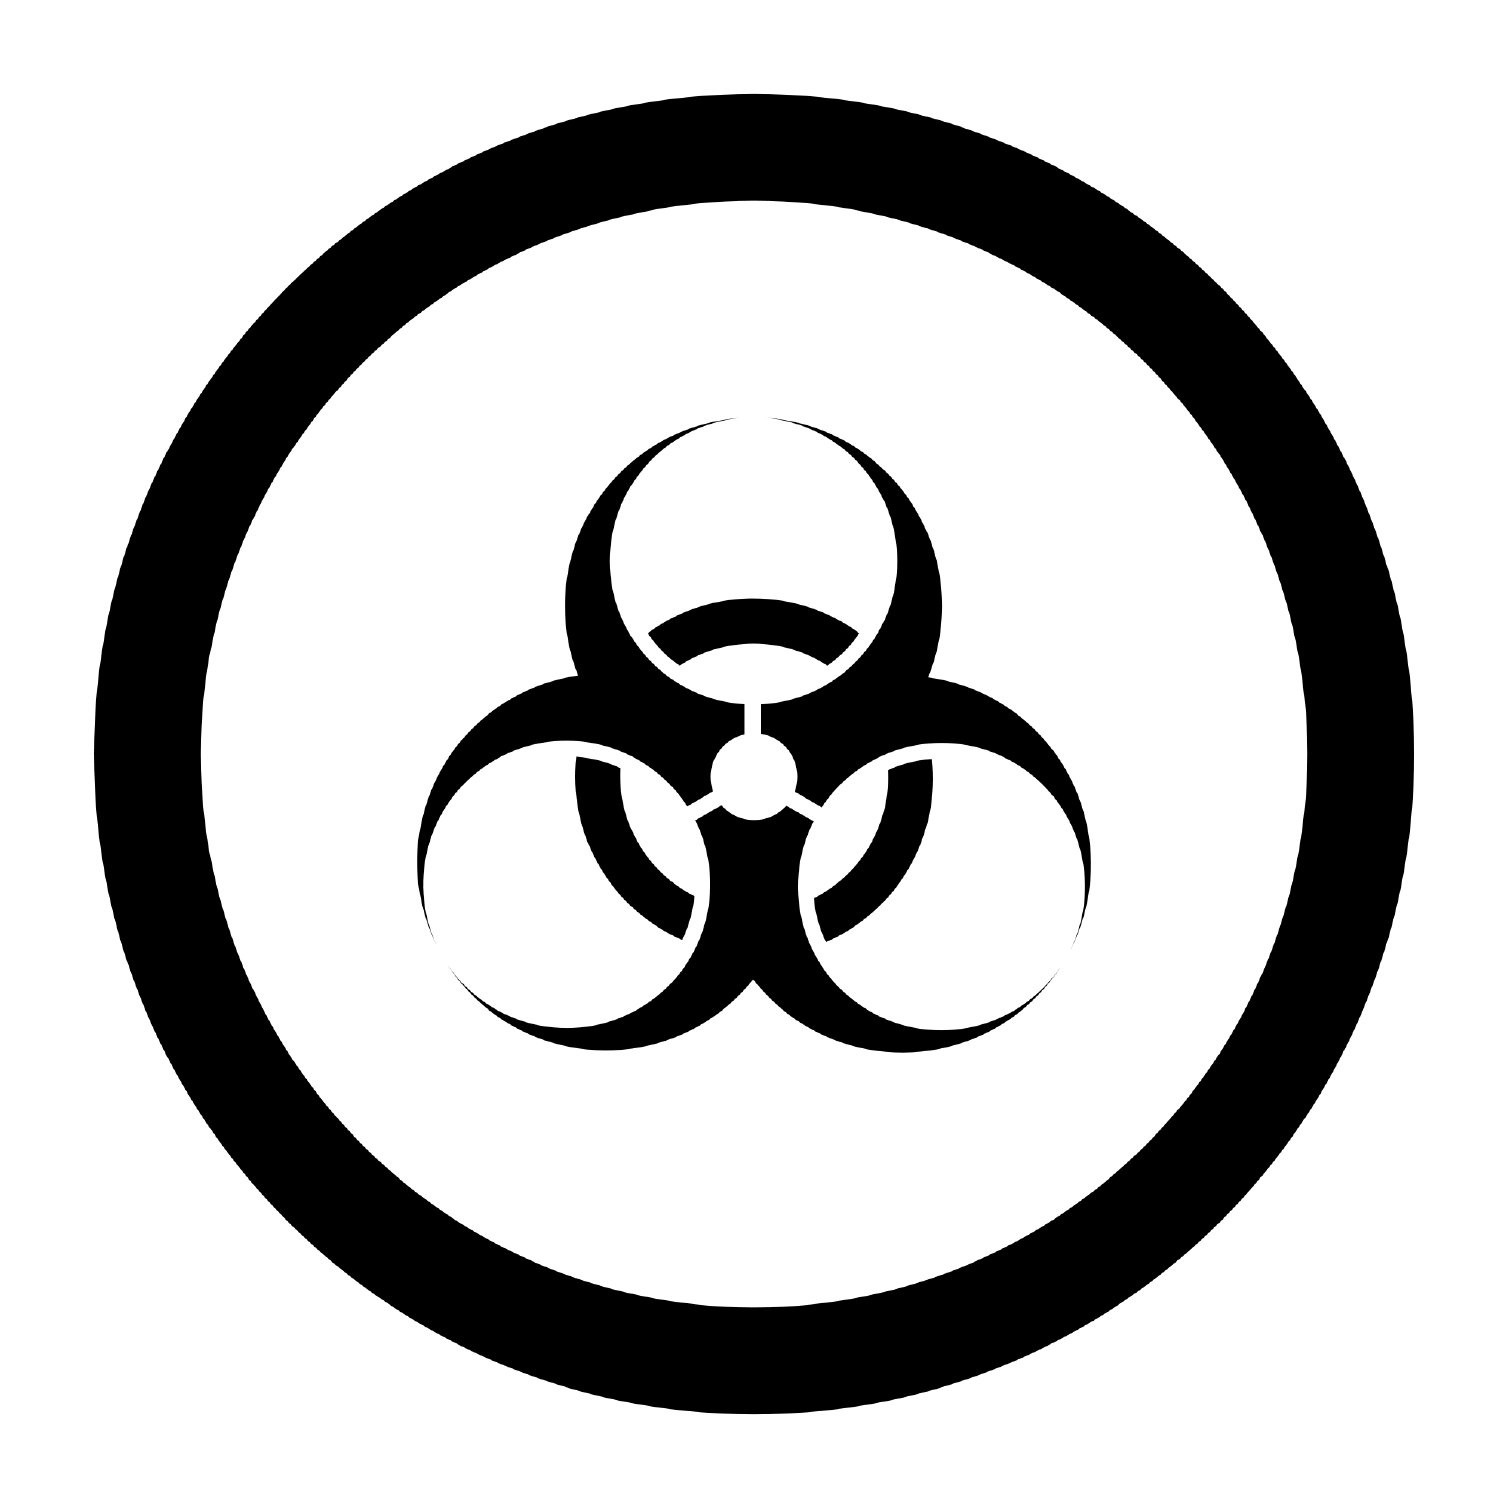 The 'biohazardous infectious material' pictogram